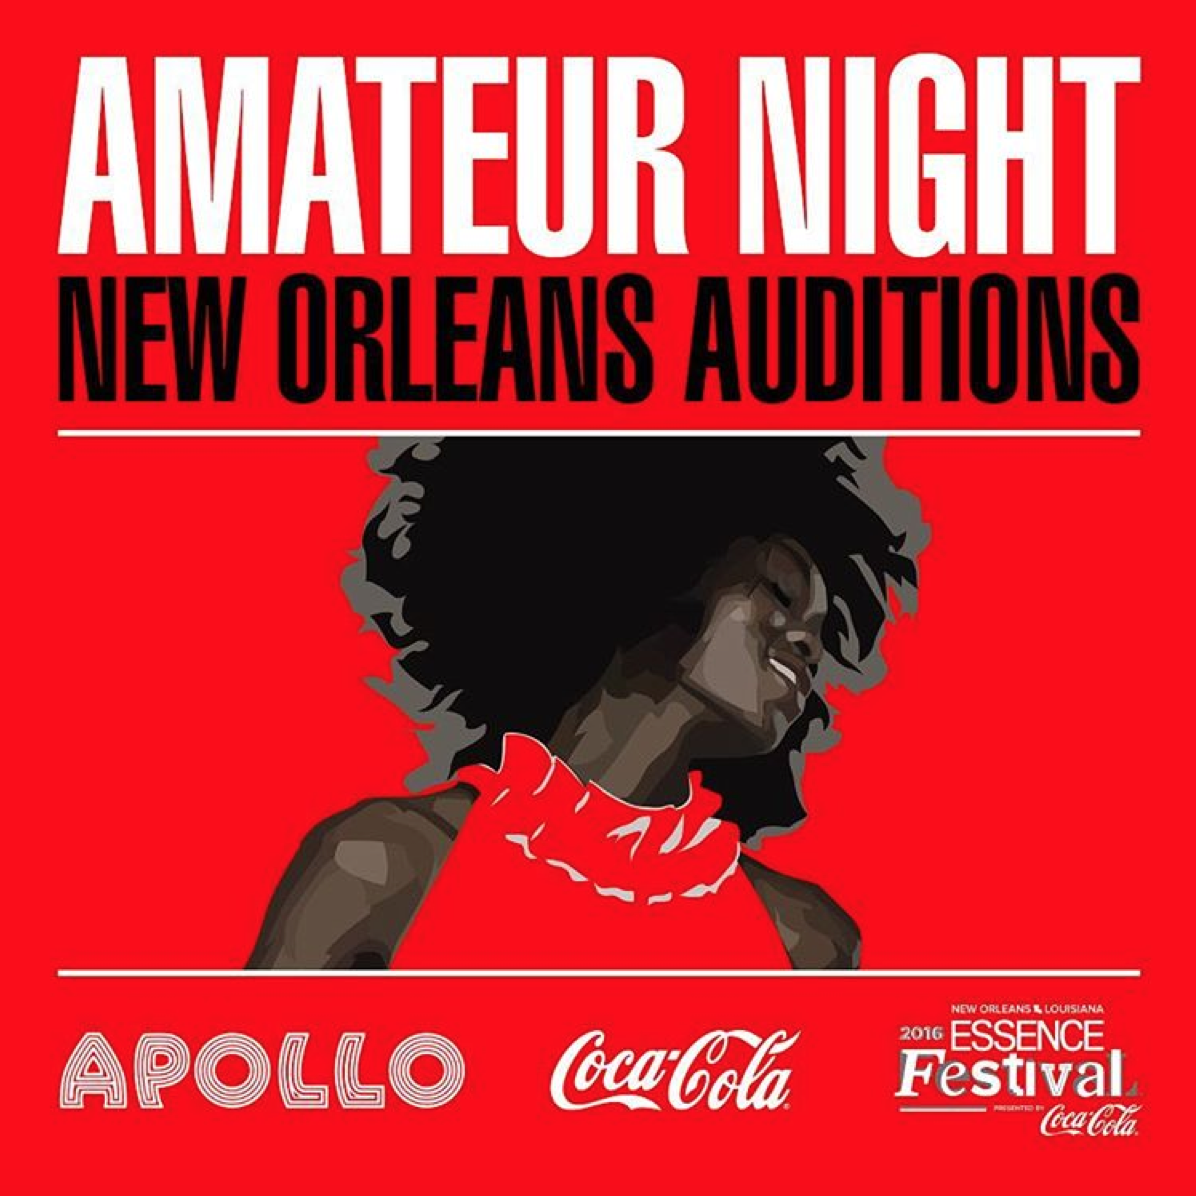 Apollo Amateur Night Auditions